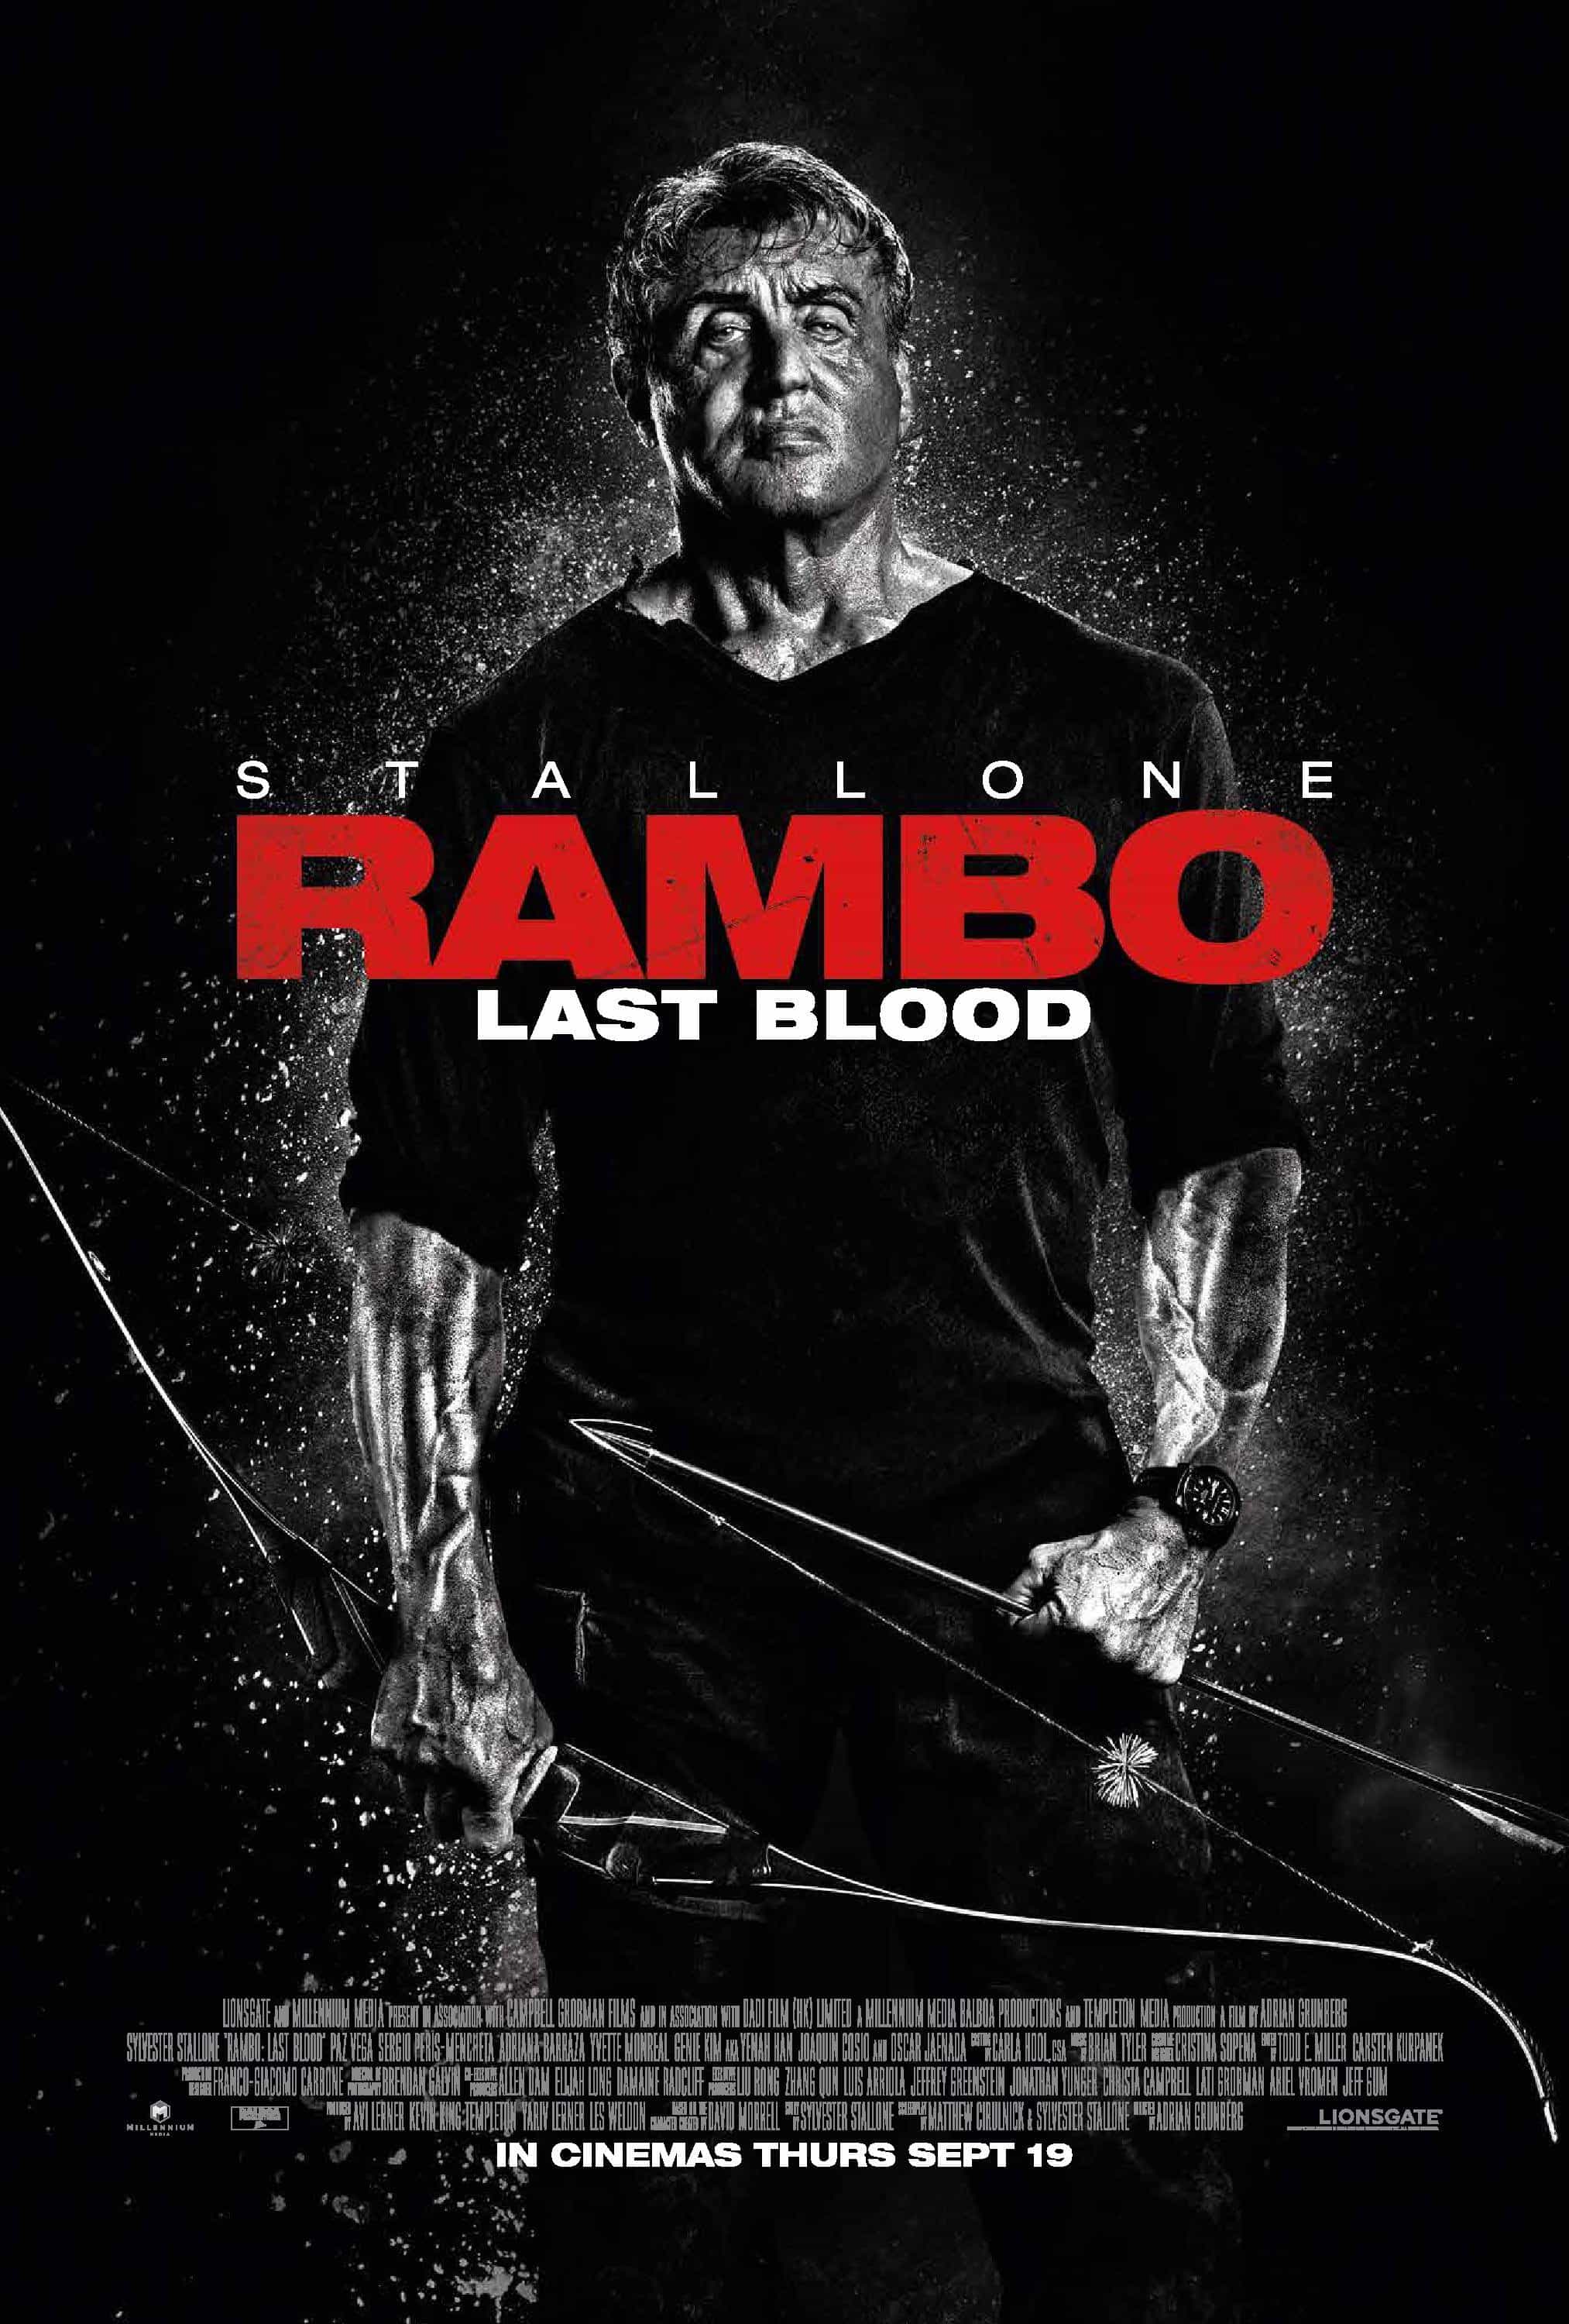 New trailer released for Rambo: Last Blood - film released 20th September 2019